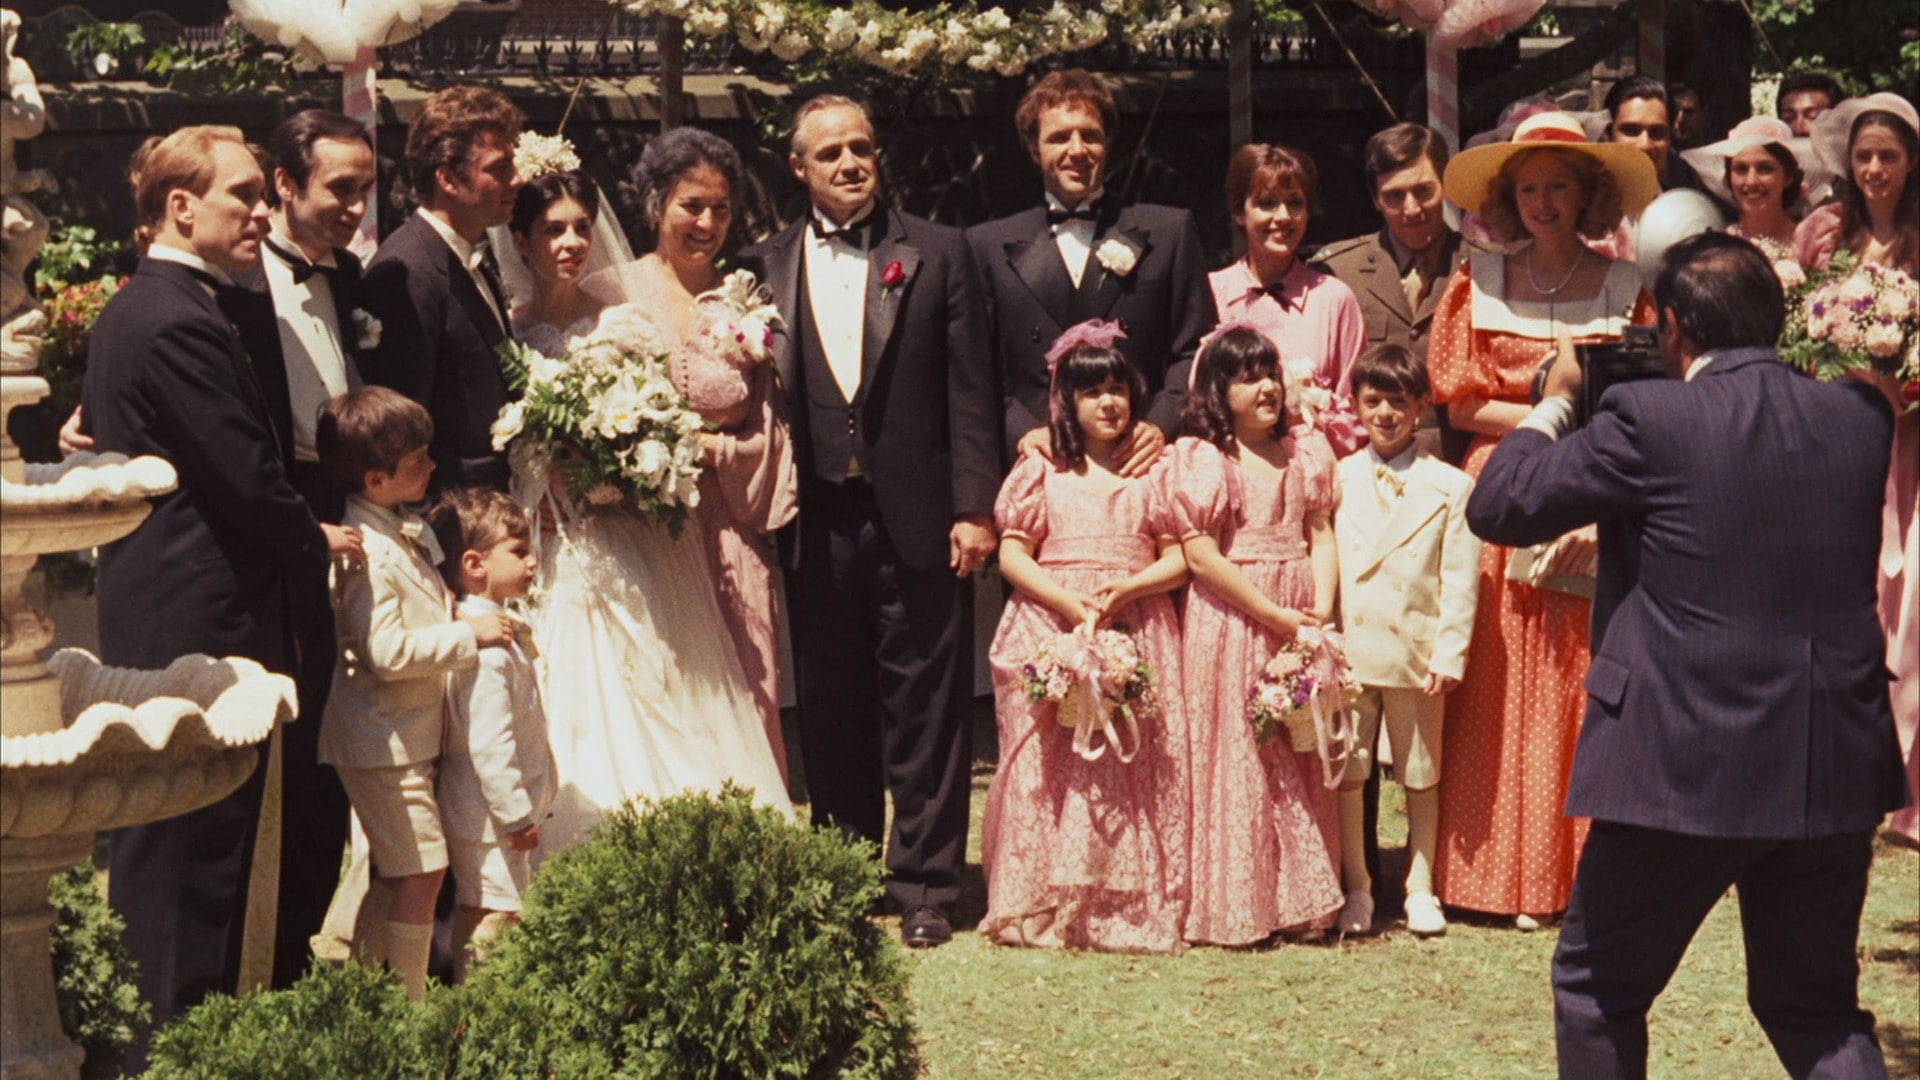 The Godfather Wedding